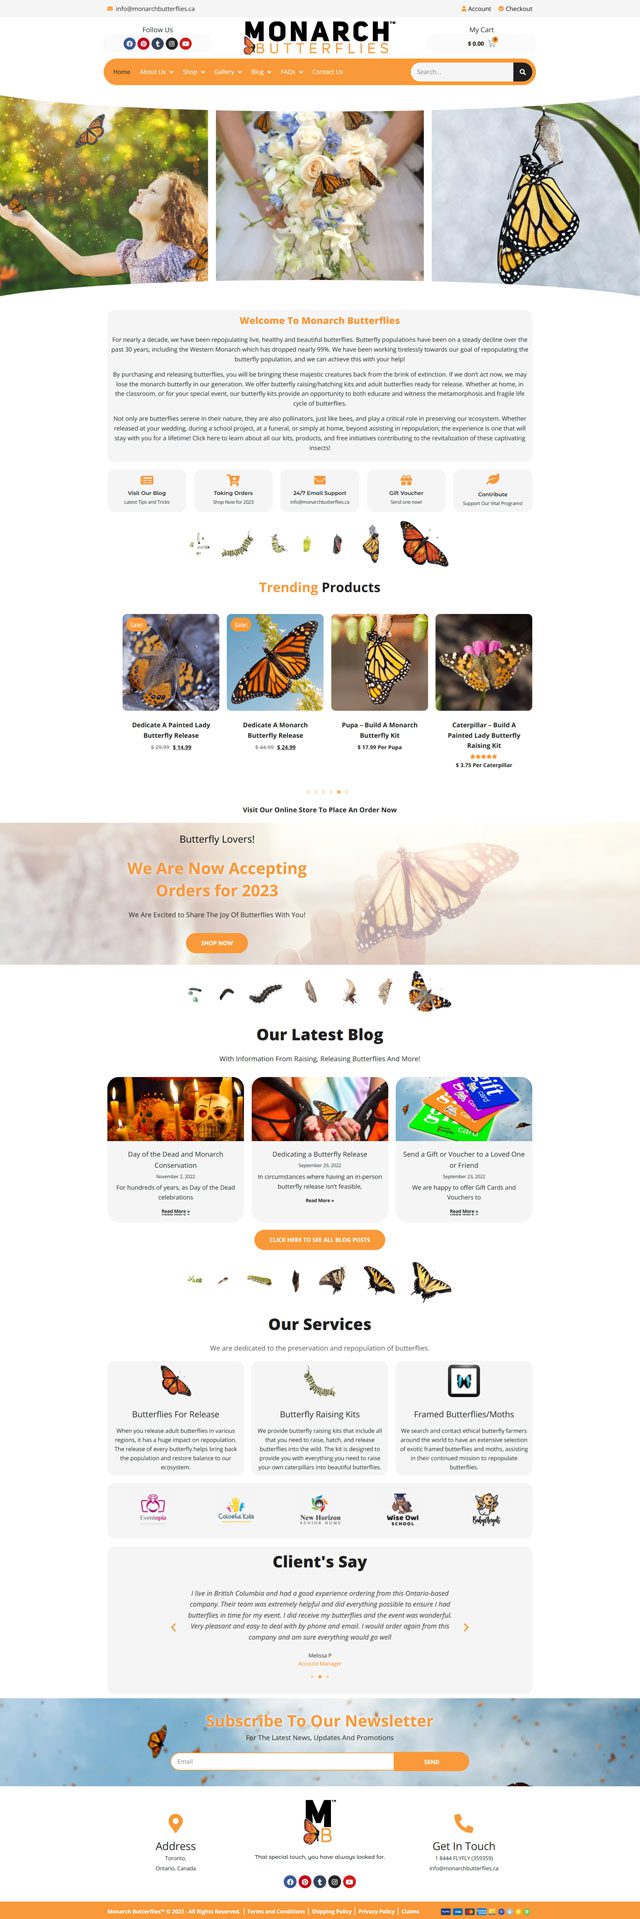 monarchbutterflies.ca - Homepage